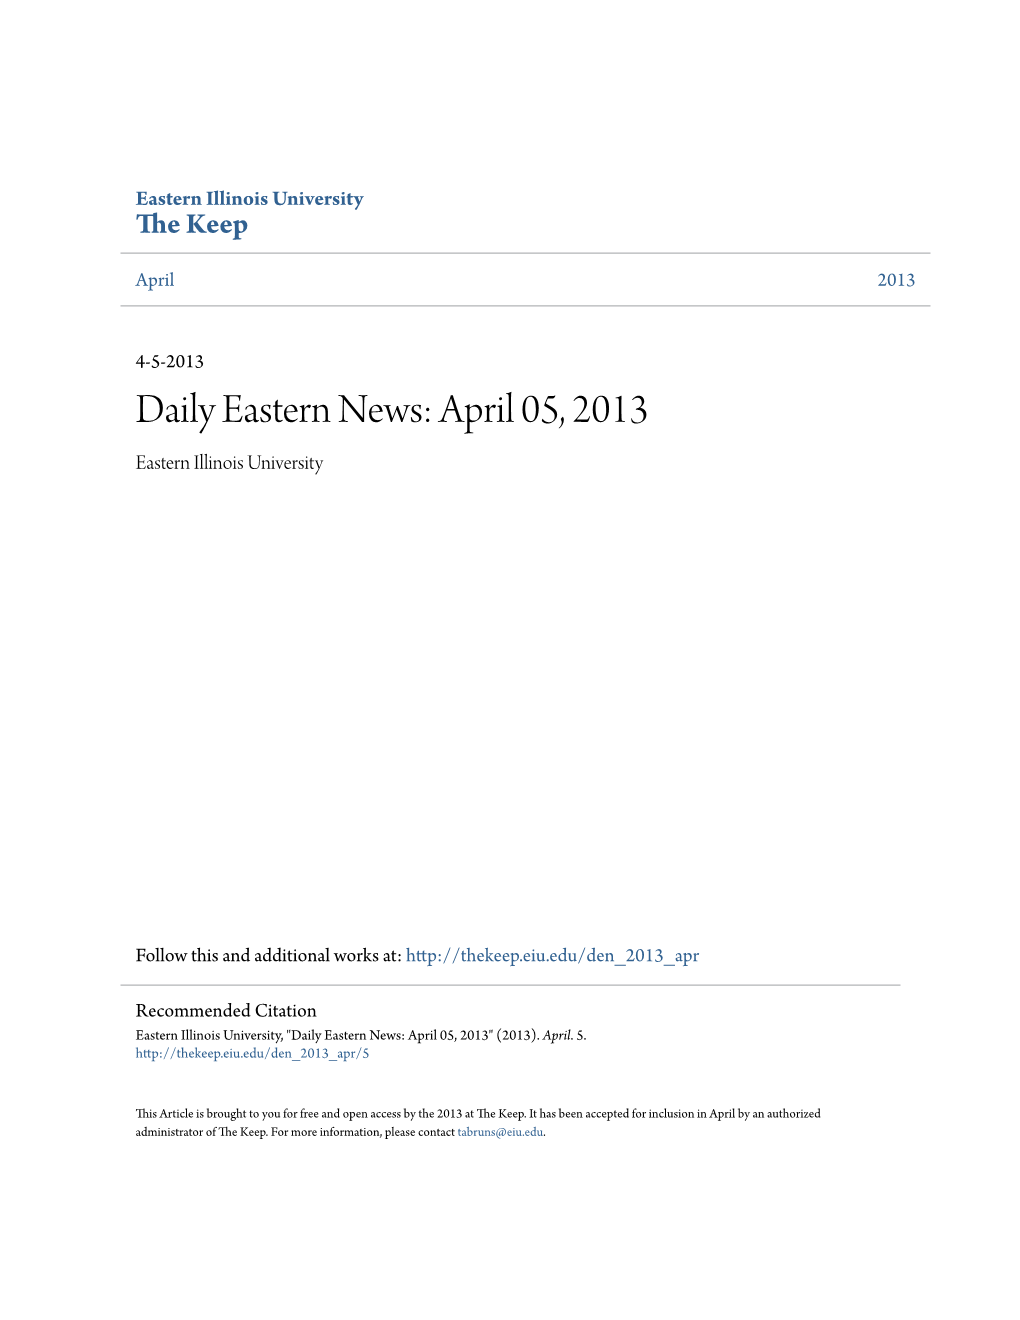 Daily Eastern News: April 05, 2013 Eastern Illinois University